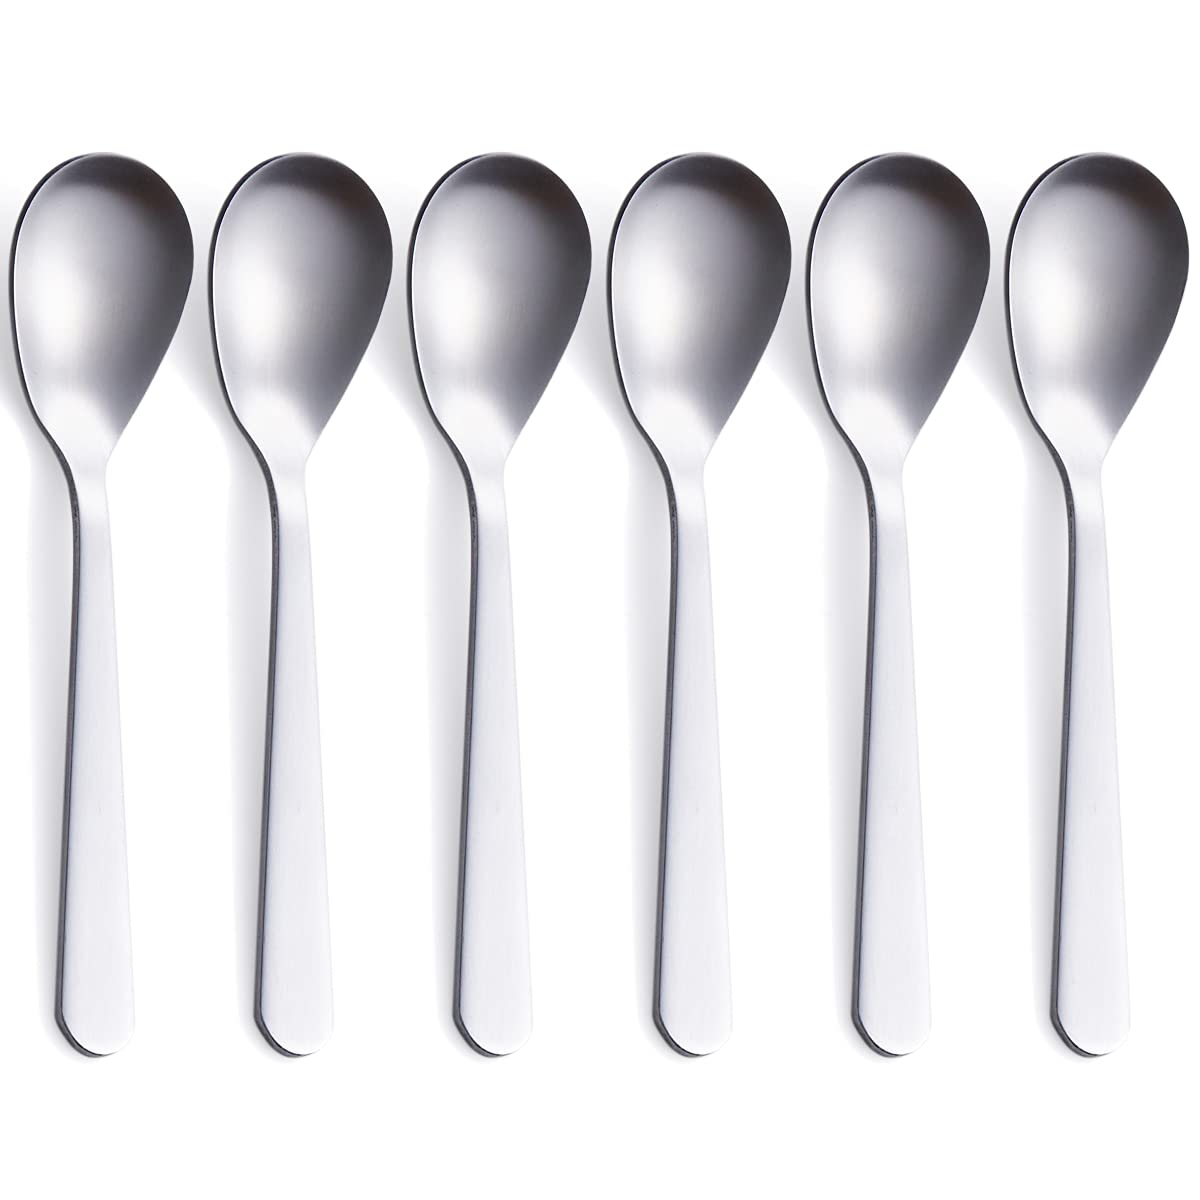 FULLYWARE Demitasse Espresso Spoons, Stainless Steel Satin Finish coffee Spoons, Mini Teaspoons, Sugar Spoons, 47-inch, Set of 6